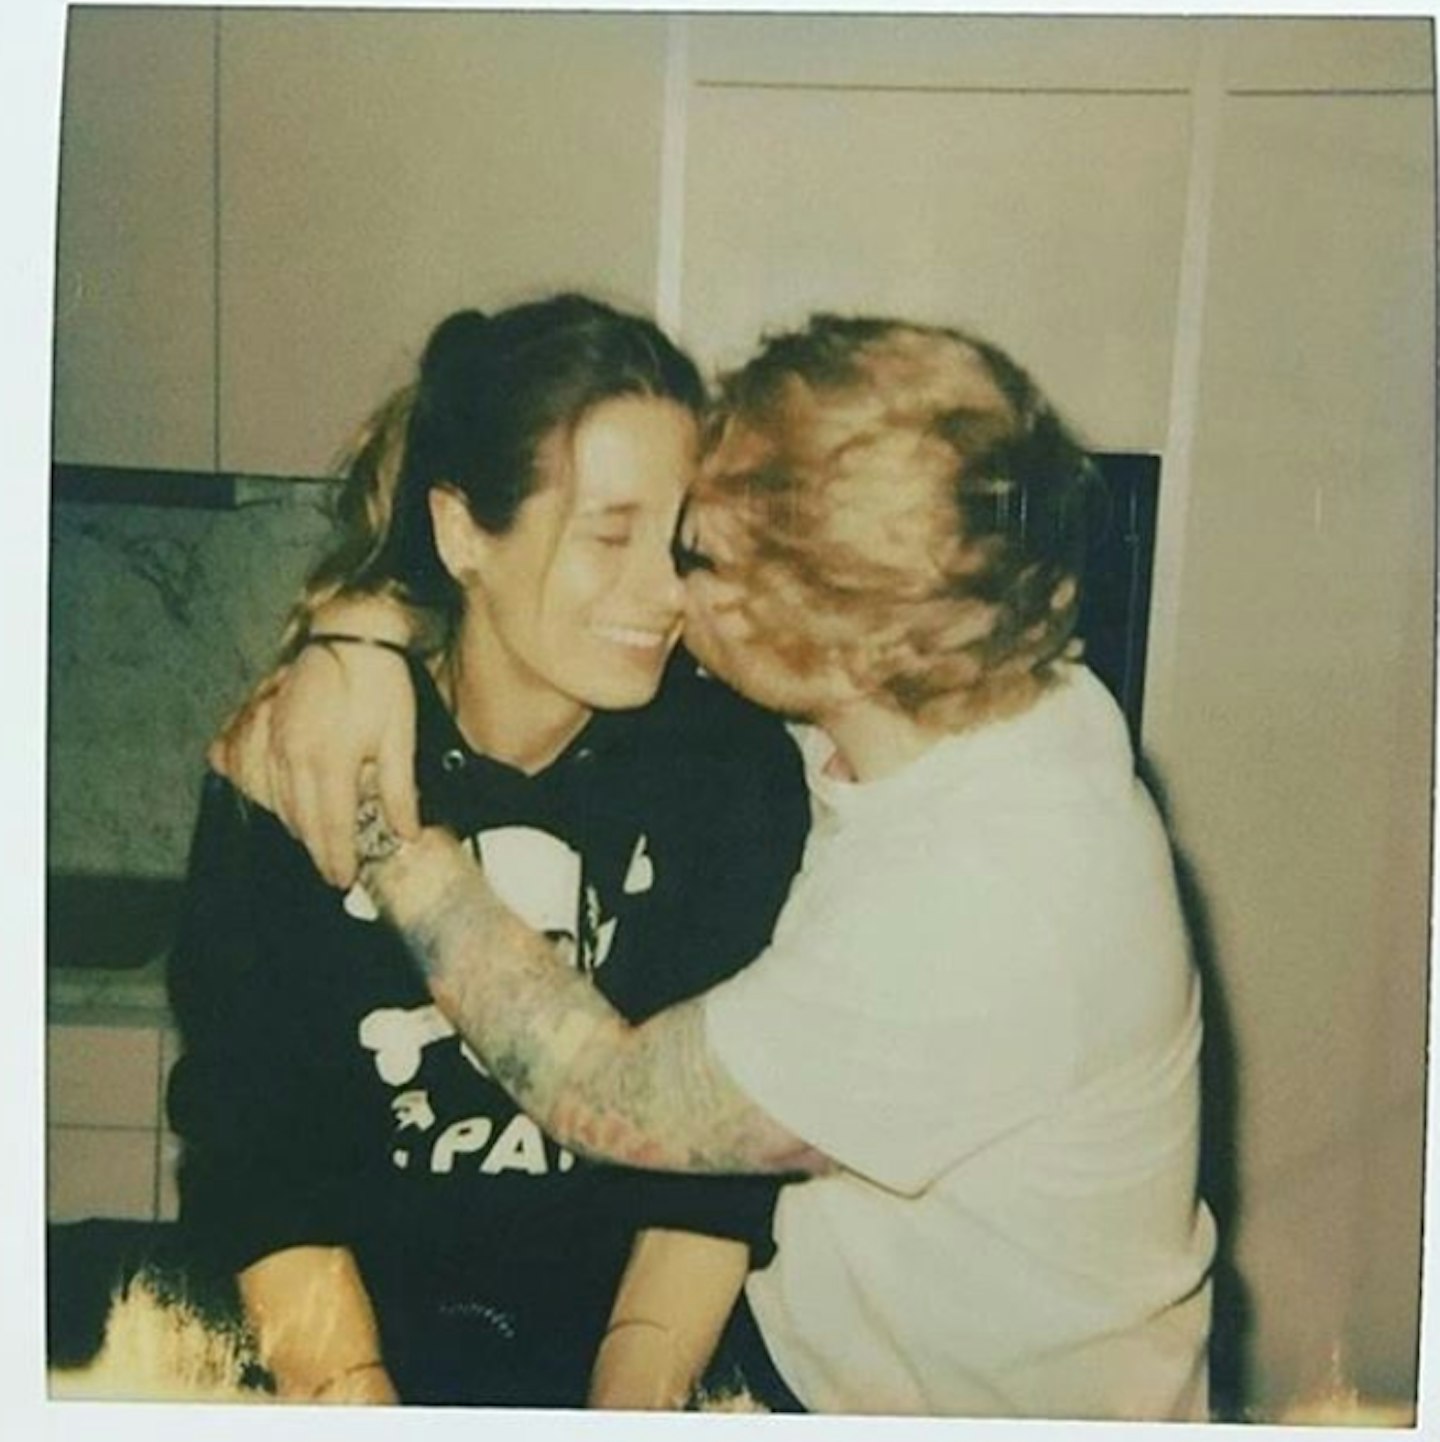 Ed Sheeran announced his engagement